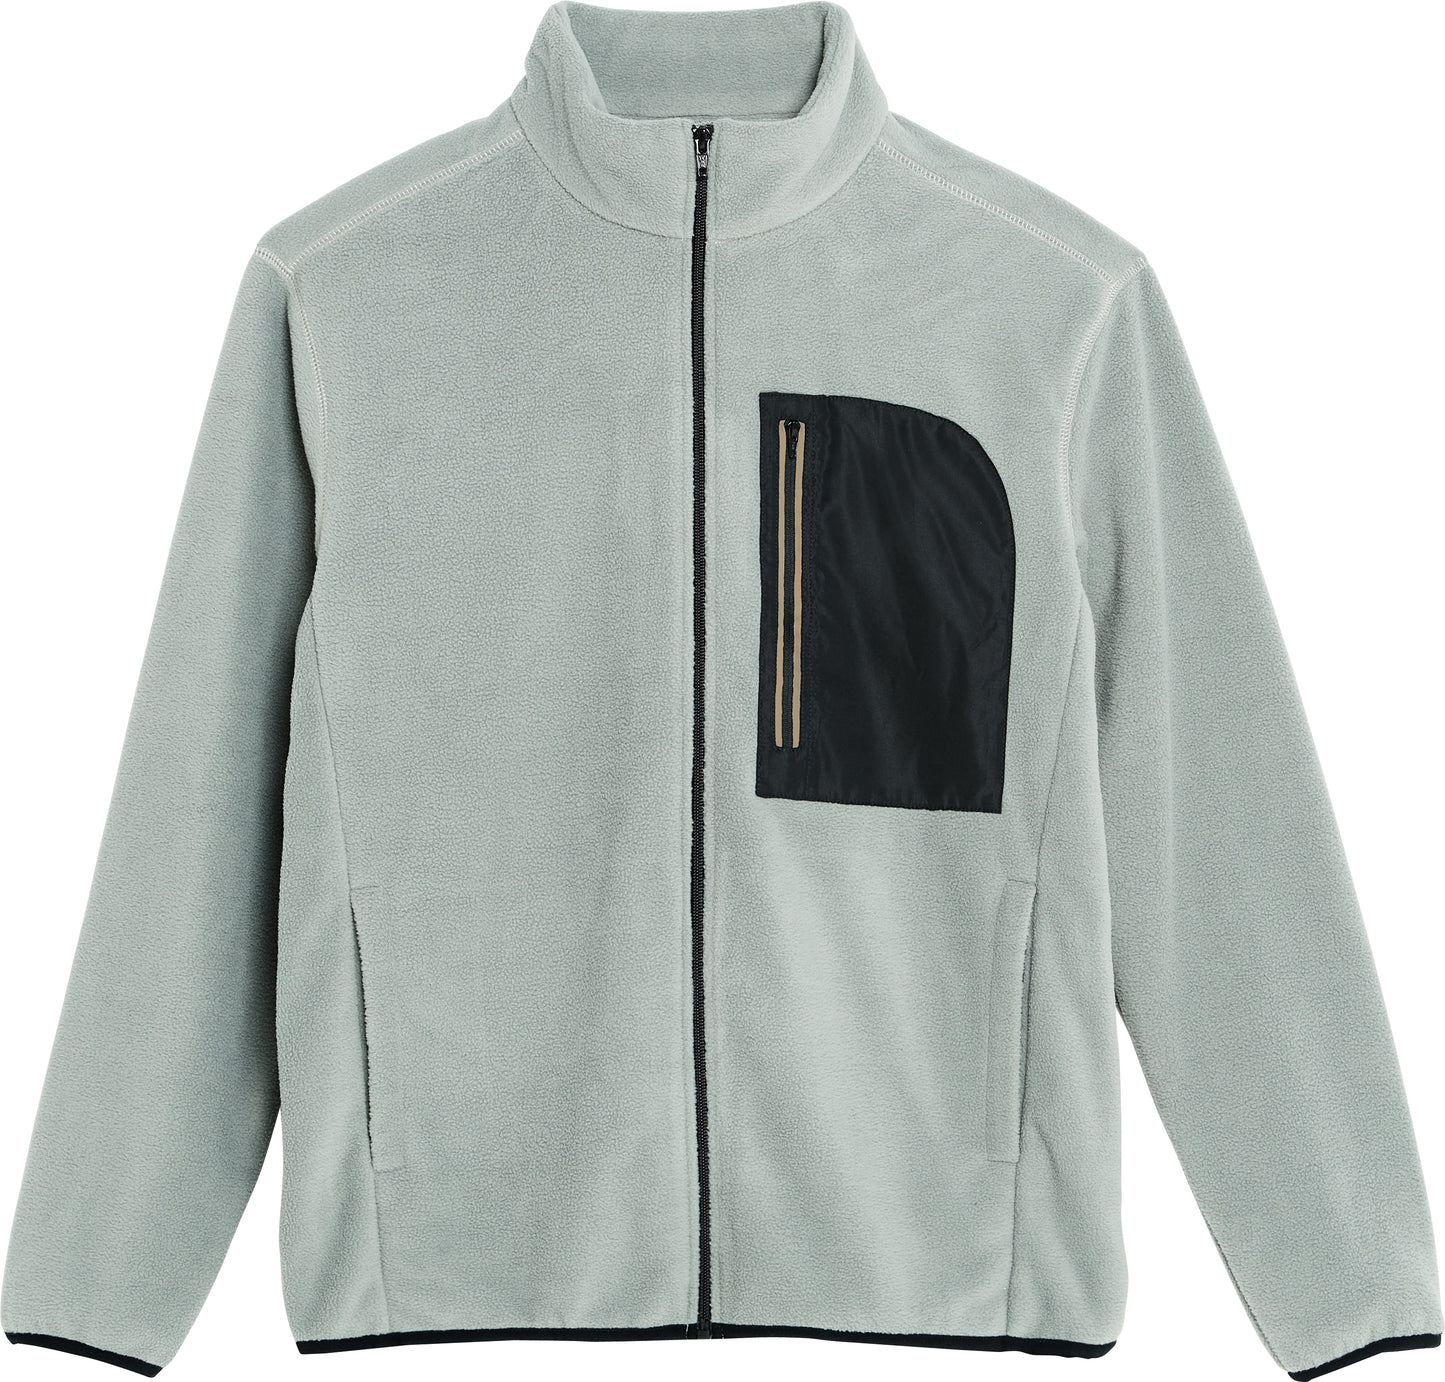 [Plus-1] 238-RFJ RFJ Reflective Fleece Jacket